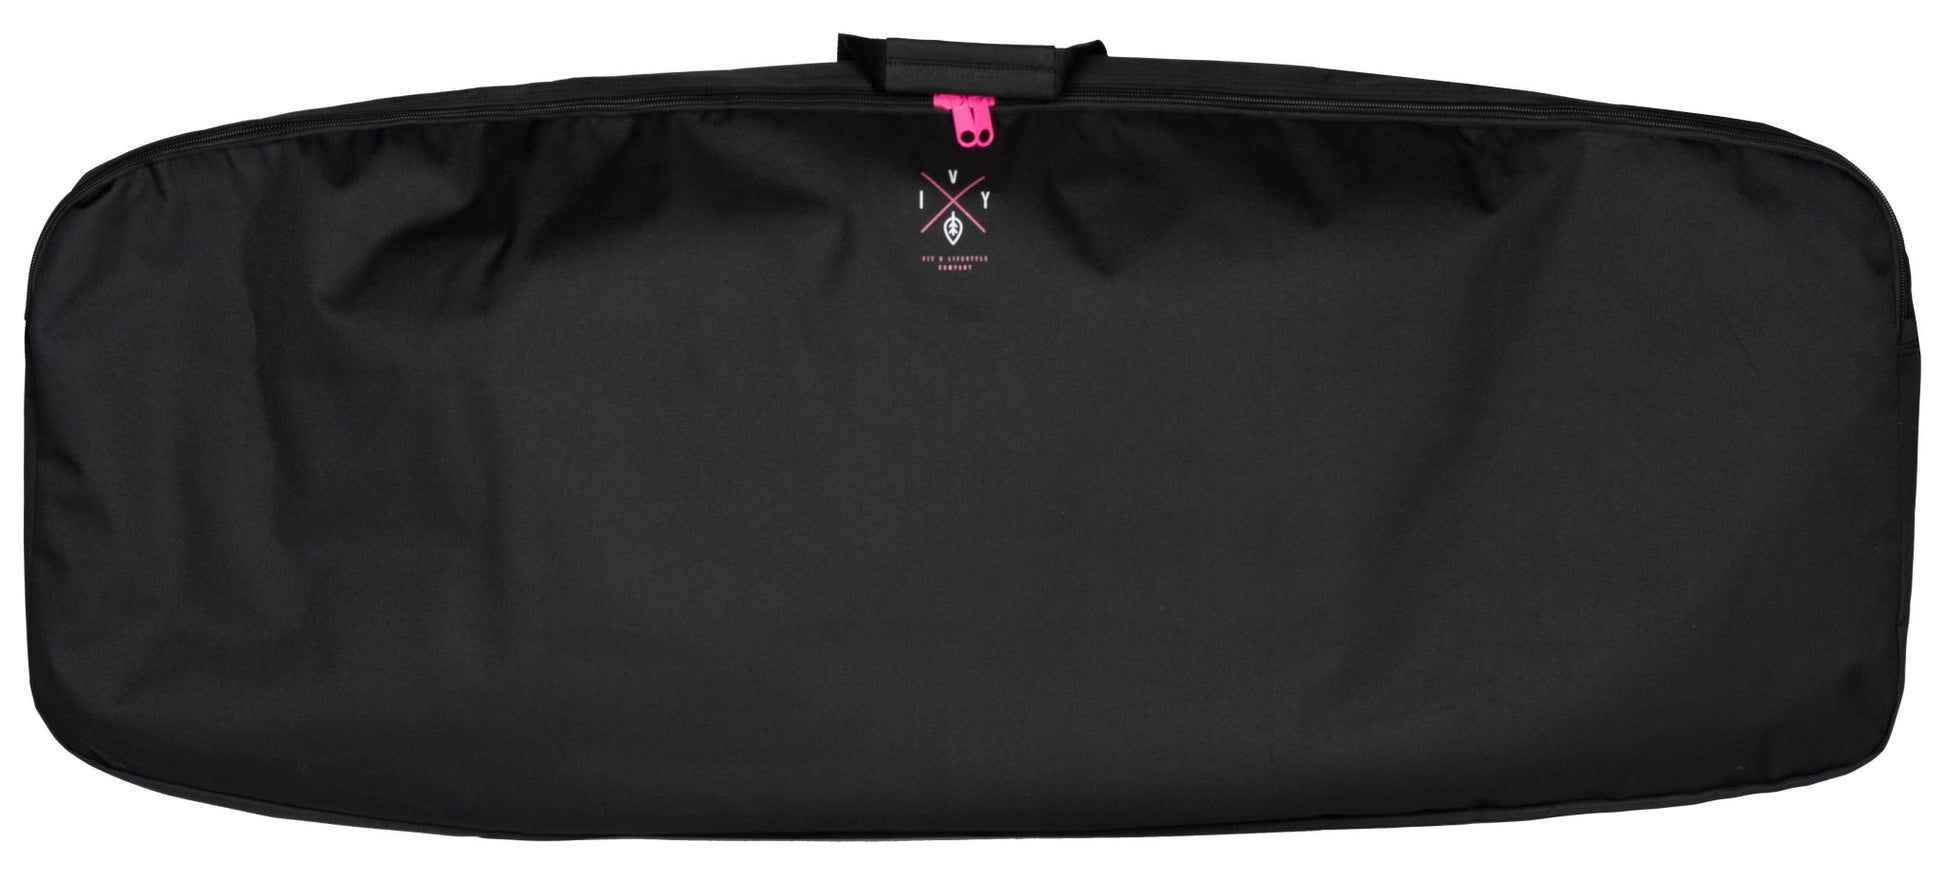 2023 IVY Retro Kneeboard Bag -Ivy226800-Black / Pink-OSFA